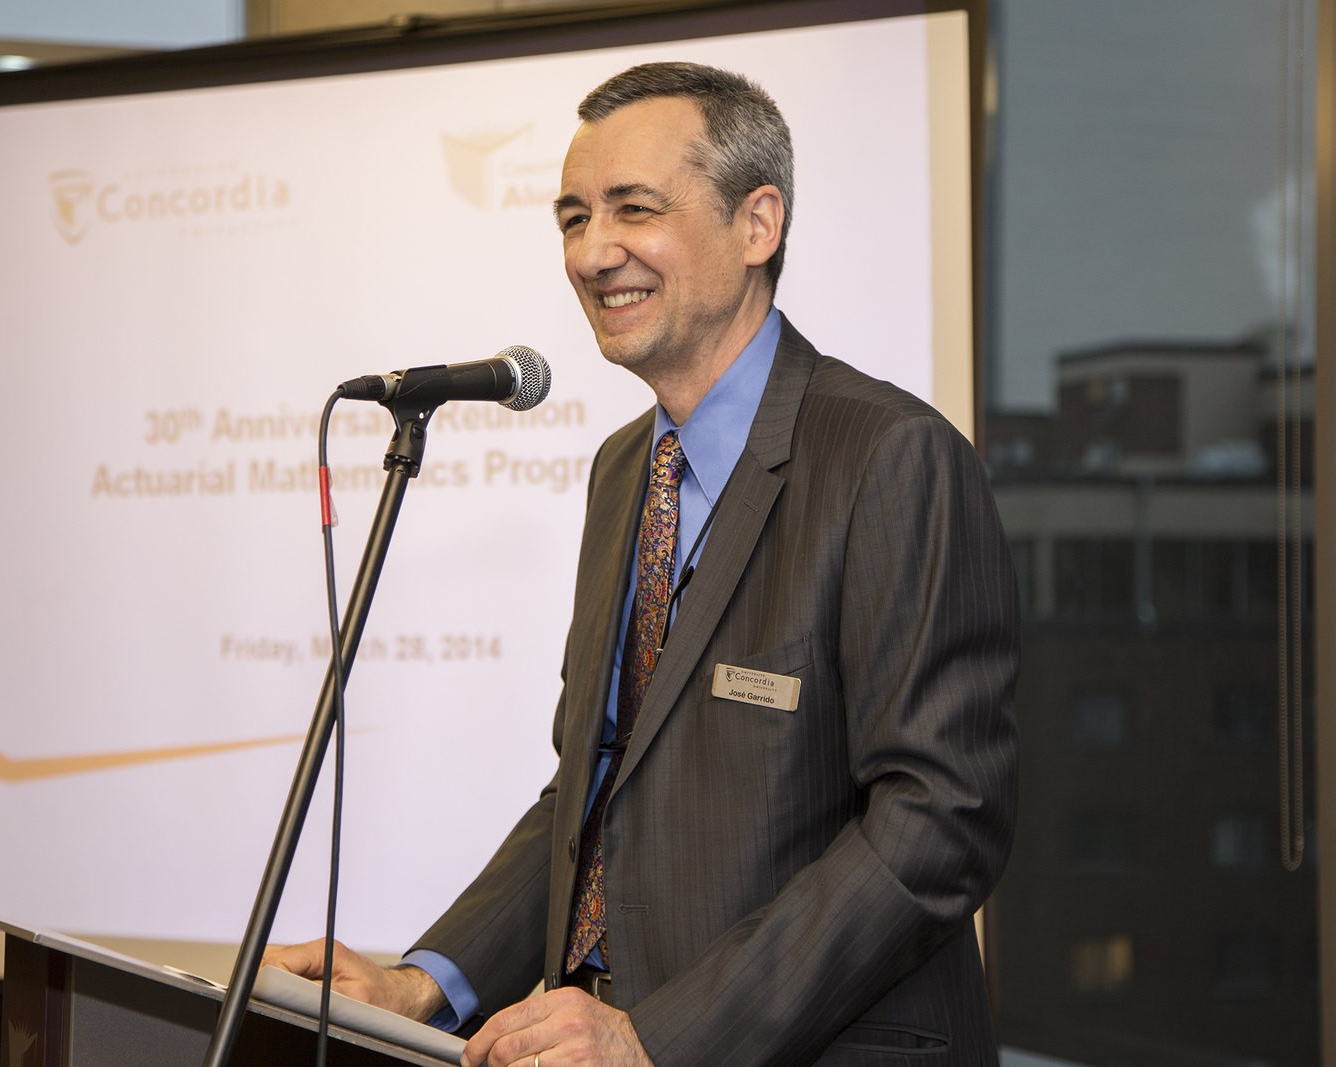 Award honouring Concordia professor José Garrido raises more than $52,000